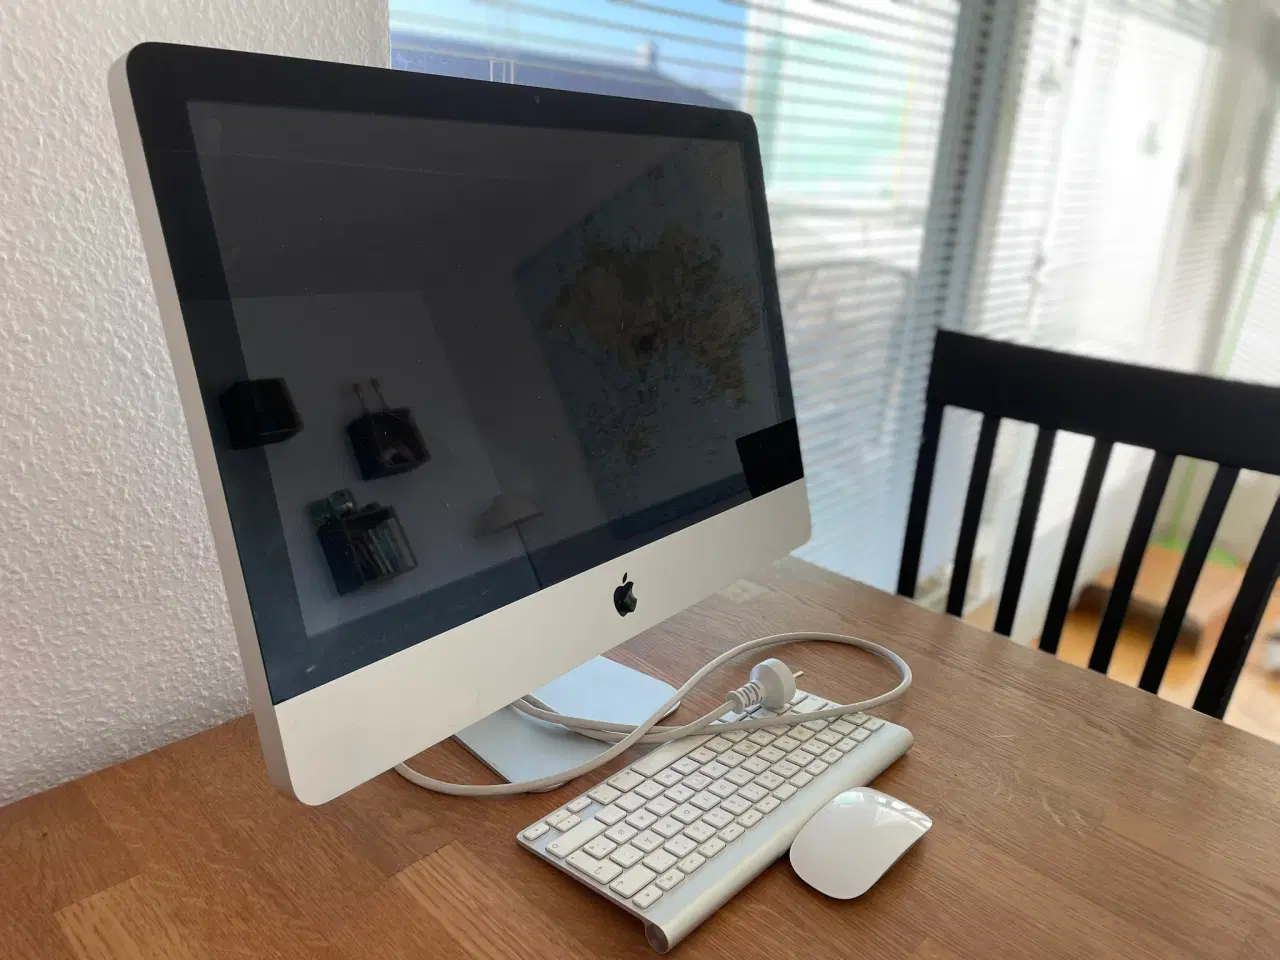 Billede 2 - iMac computer